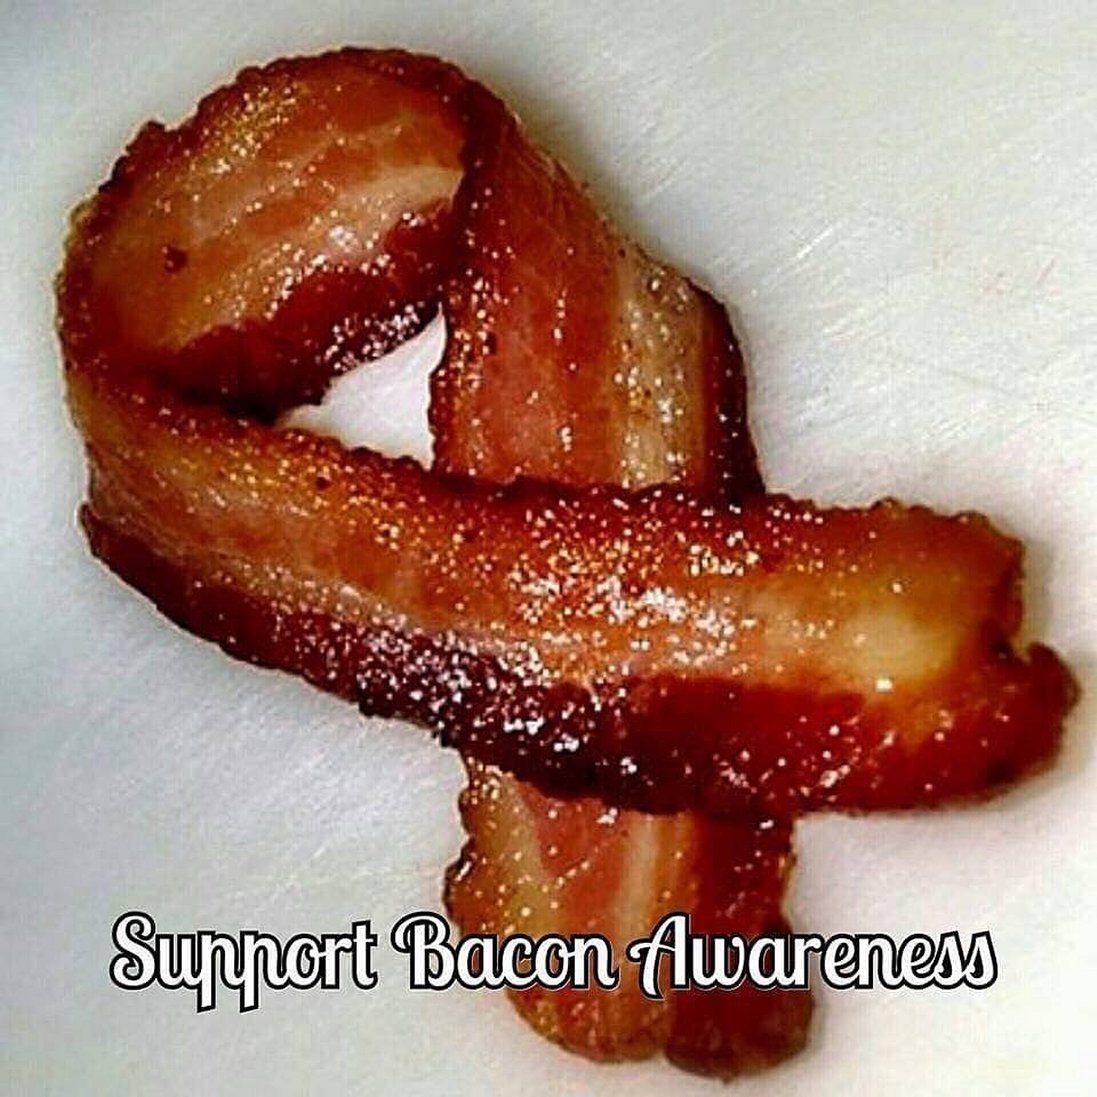 Bacon Awareness.jpg